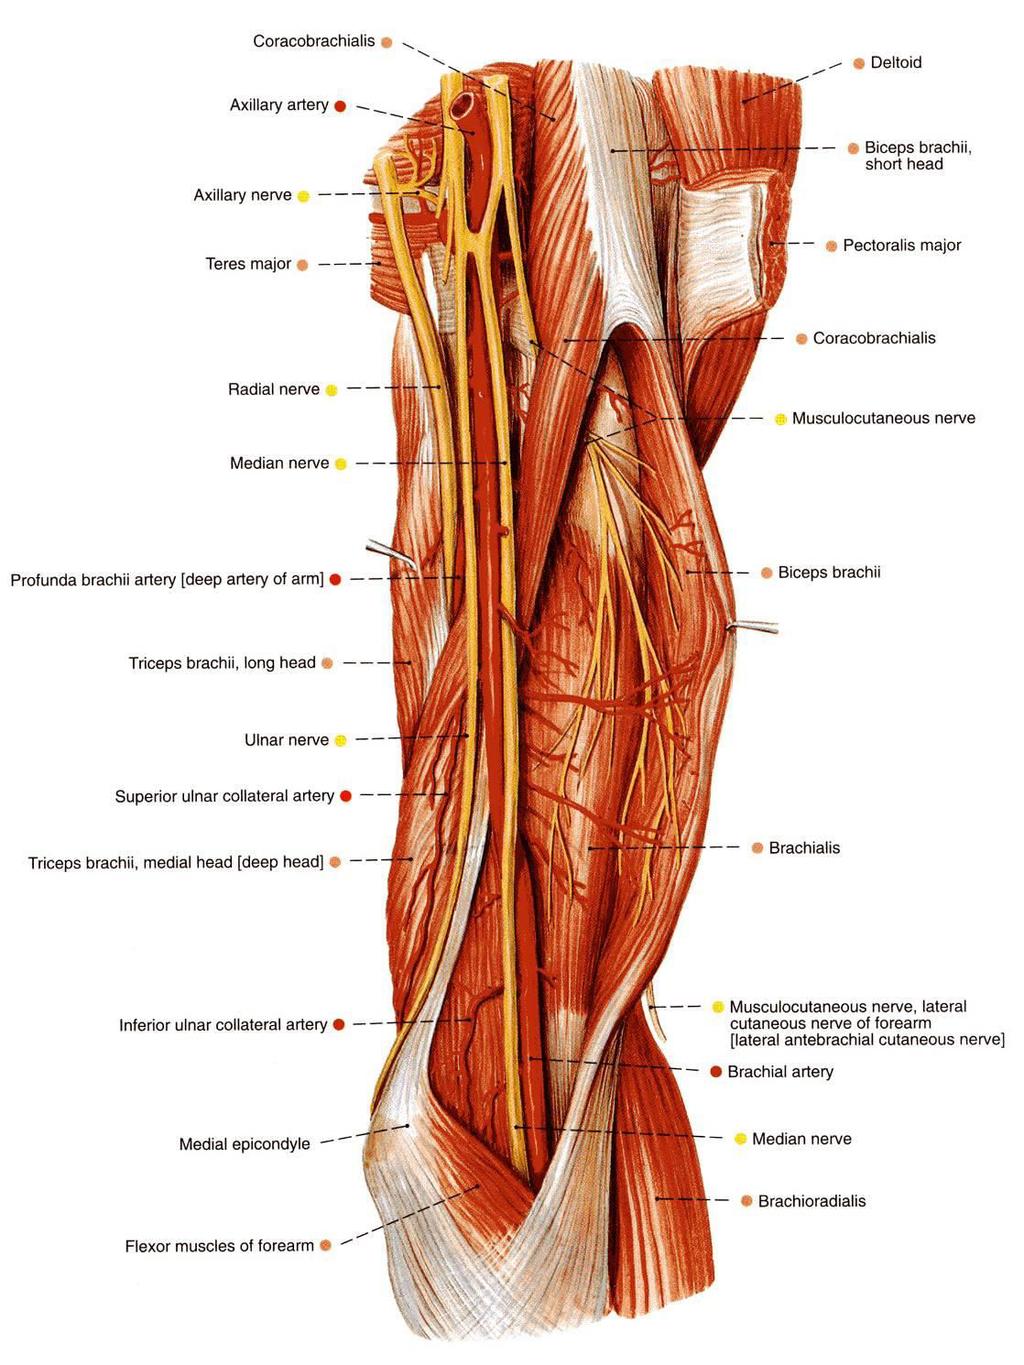 Ulnar nerve C8T1 Origin : medial cord of brachial